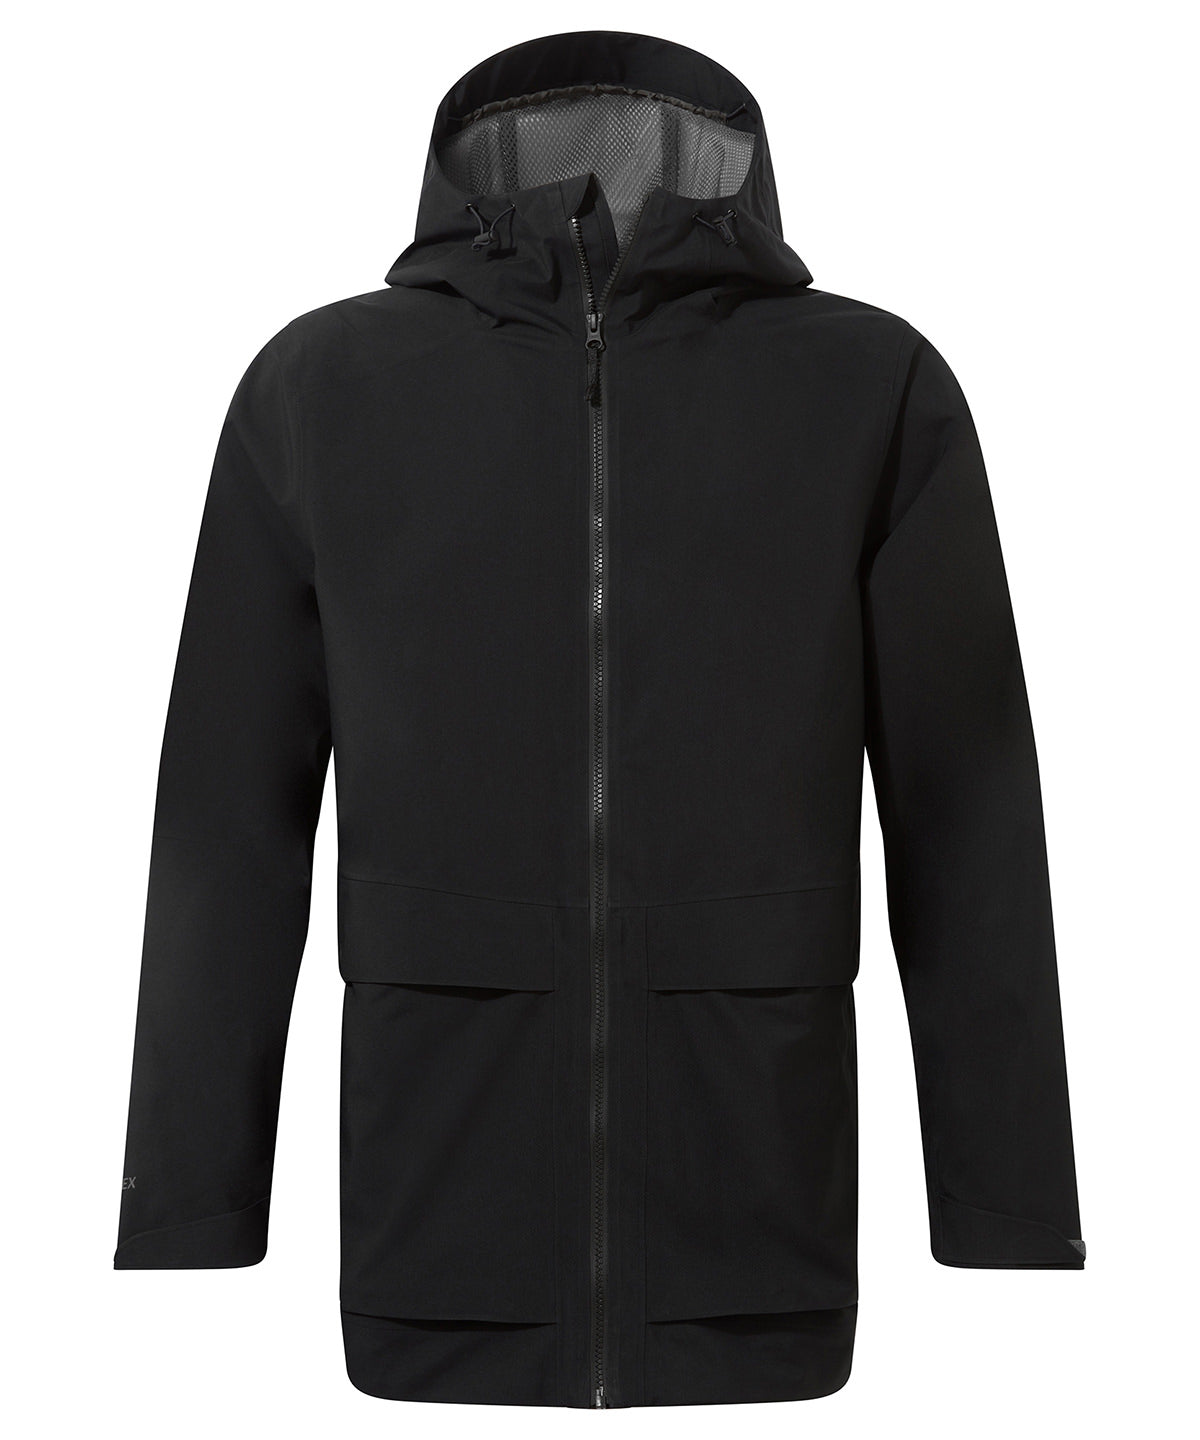 Personalised Jackets - Black Craghoppers Expert GORE-TEX® jacket